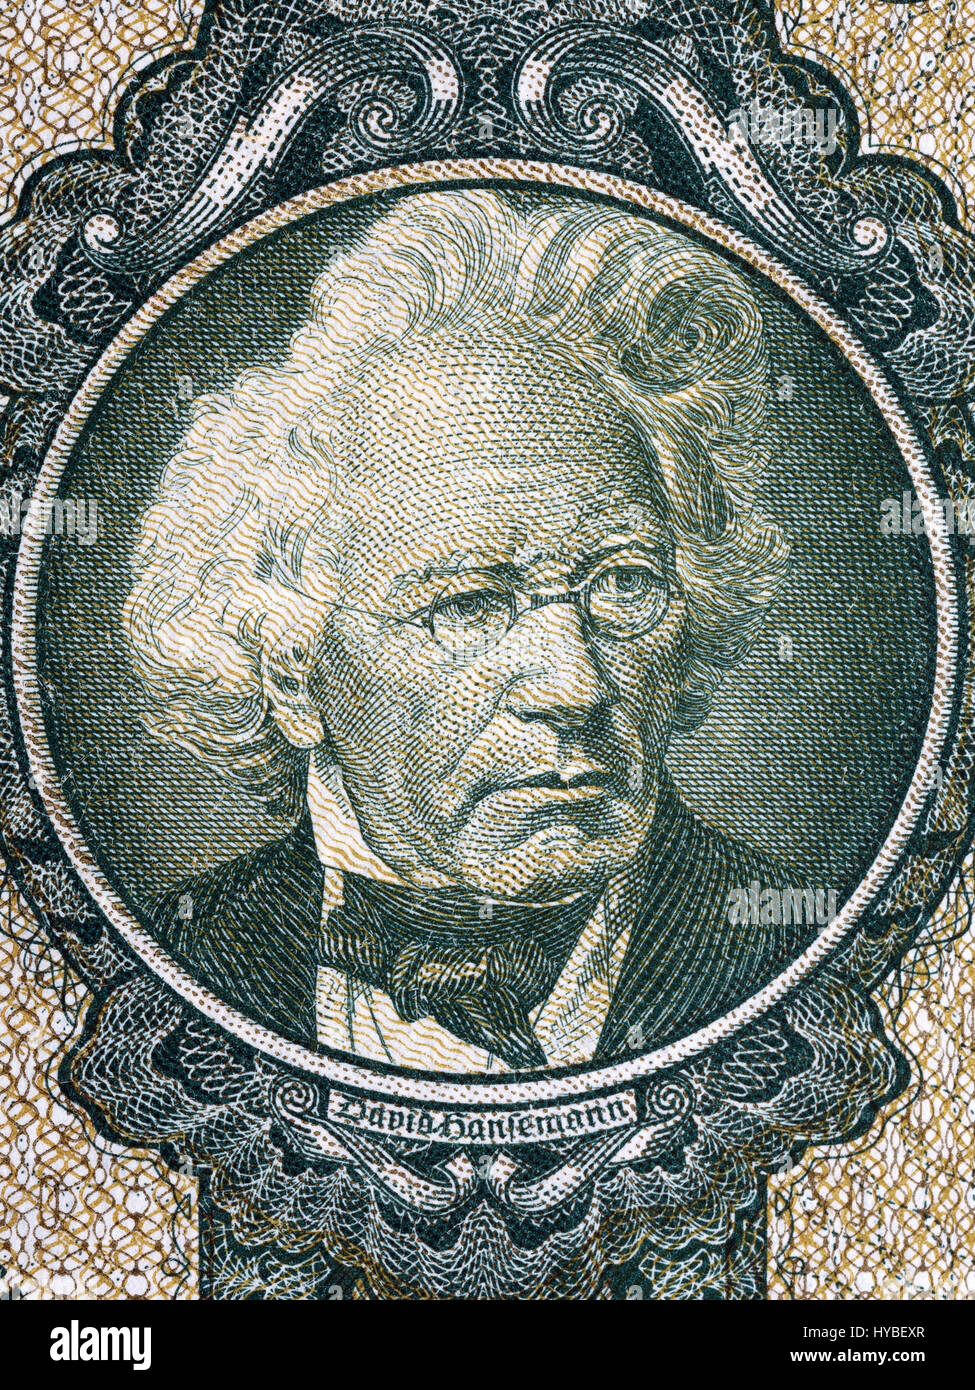 David Hansemann portrait from old German money Stock Photo